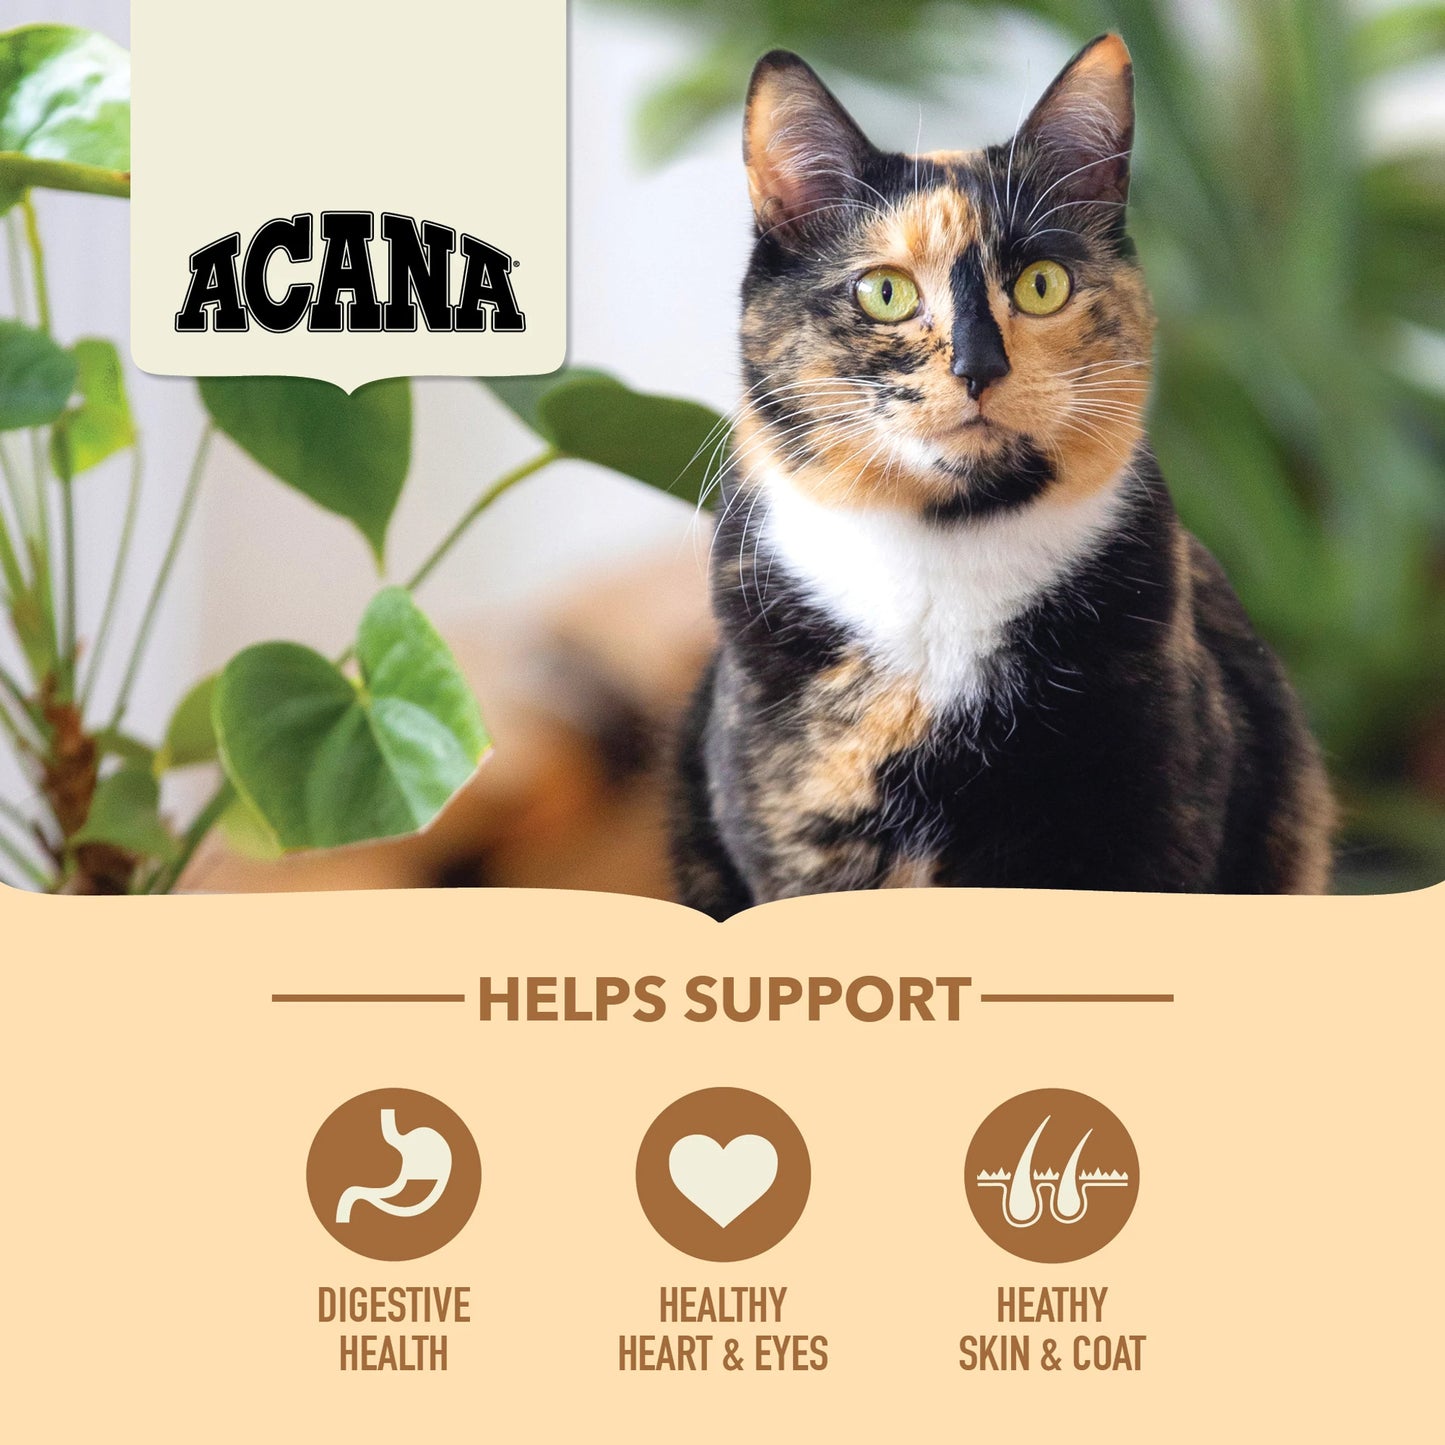 Acana Premium Cat Food Homestead Harvest Recipe  Cat Food  | PetMax Canada